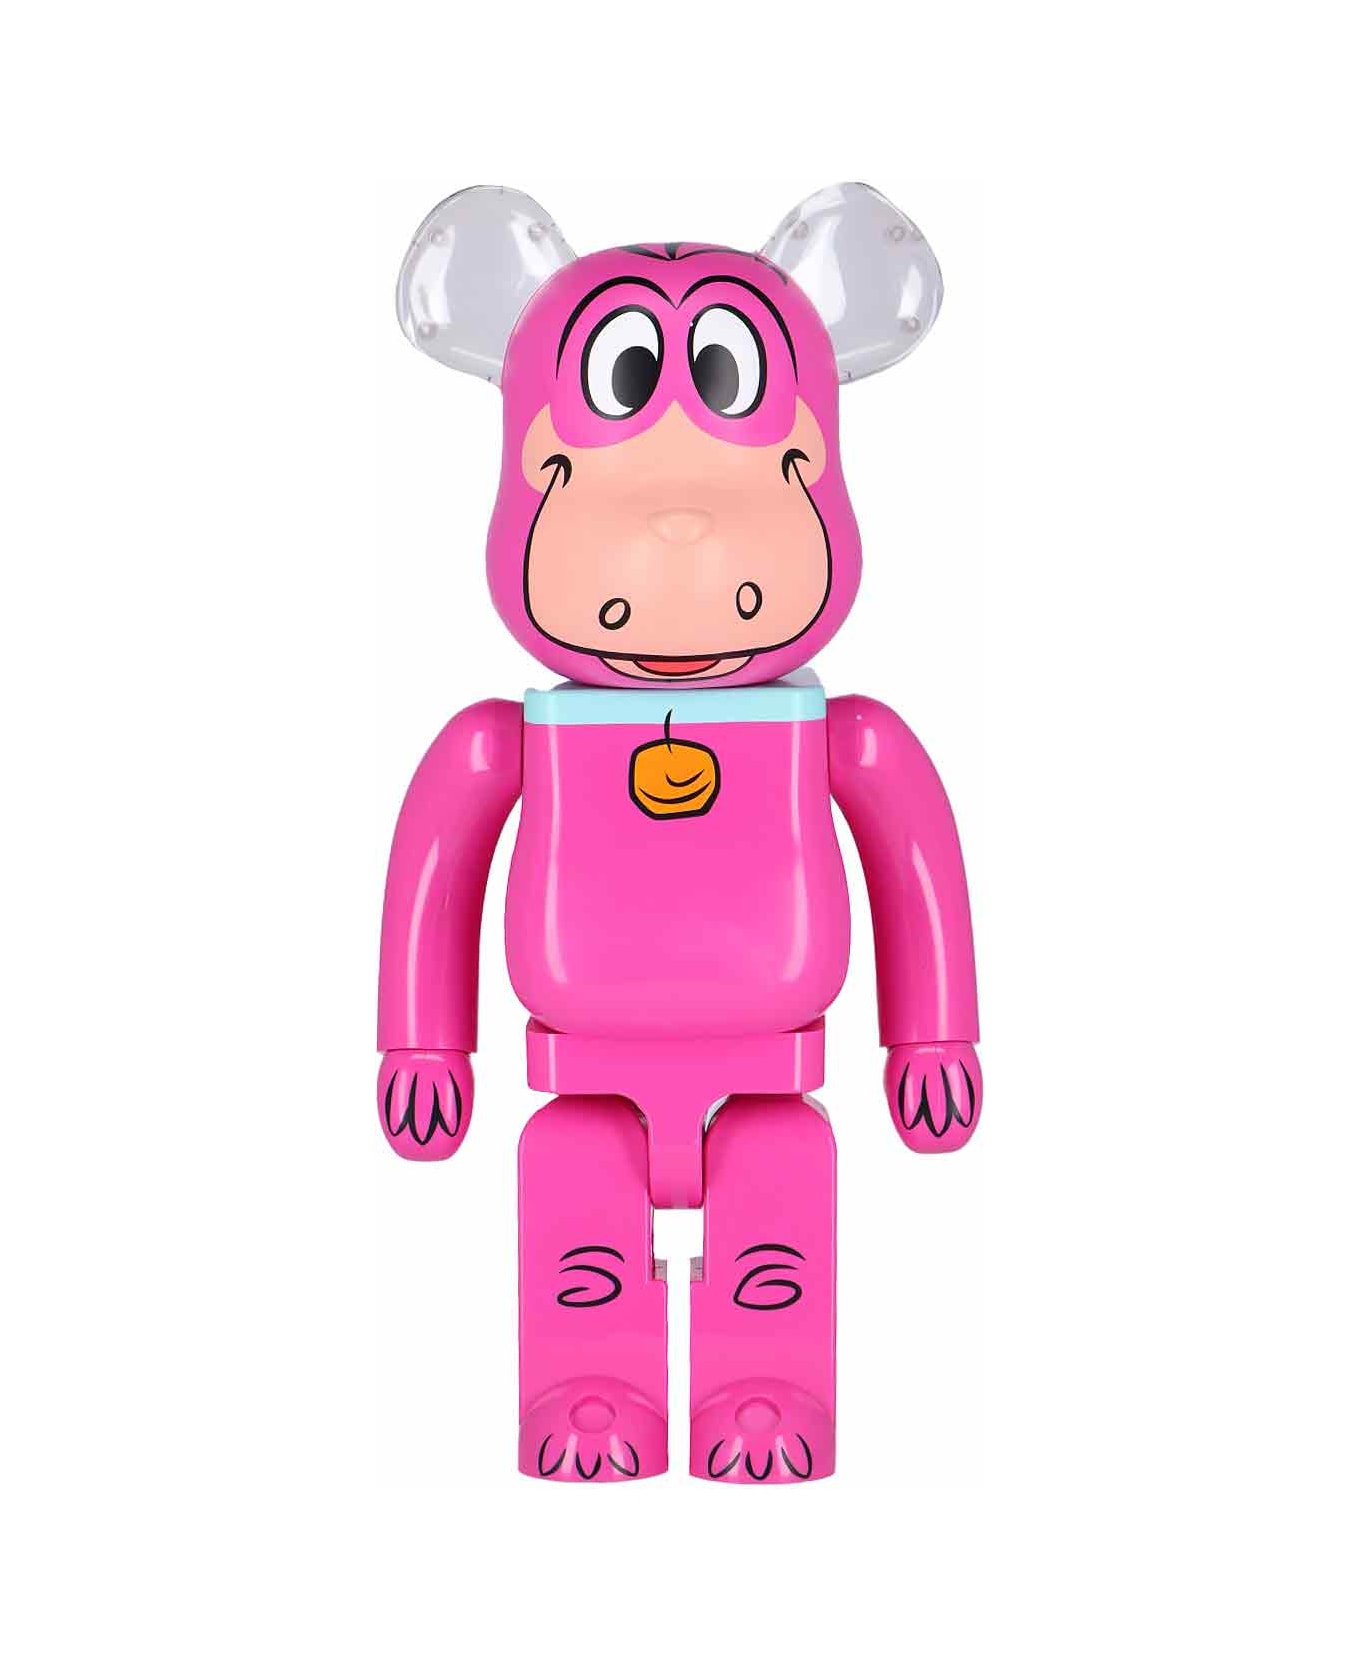 Medicom Toy Accessory - Pink